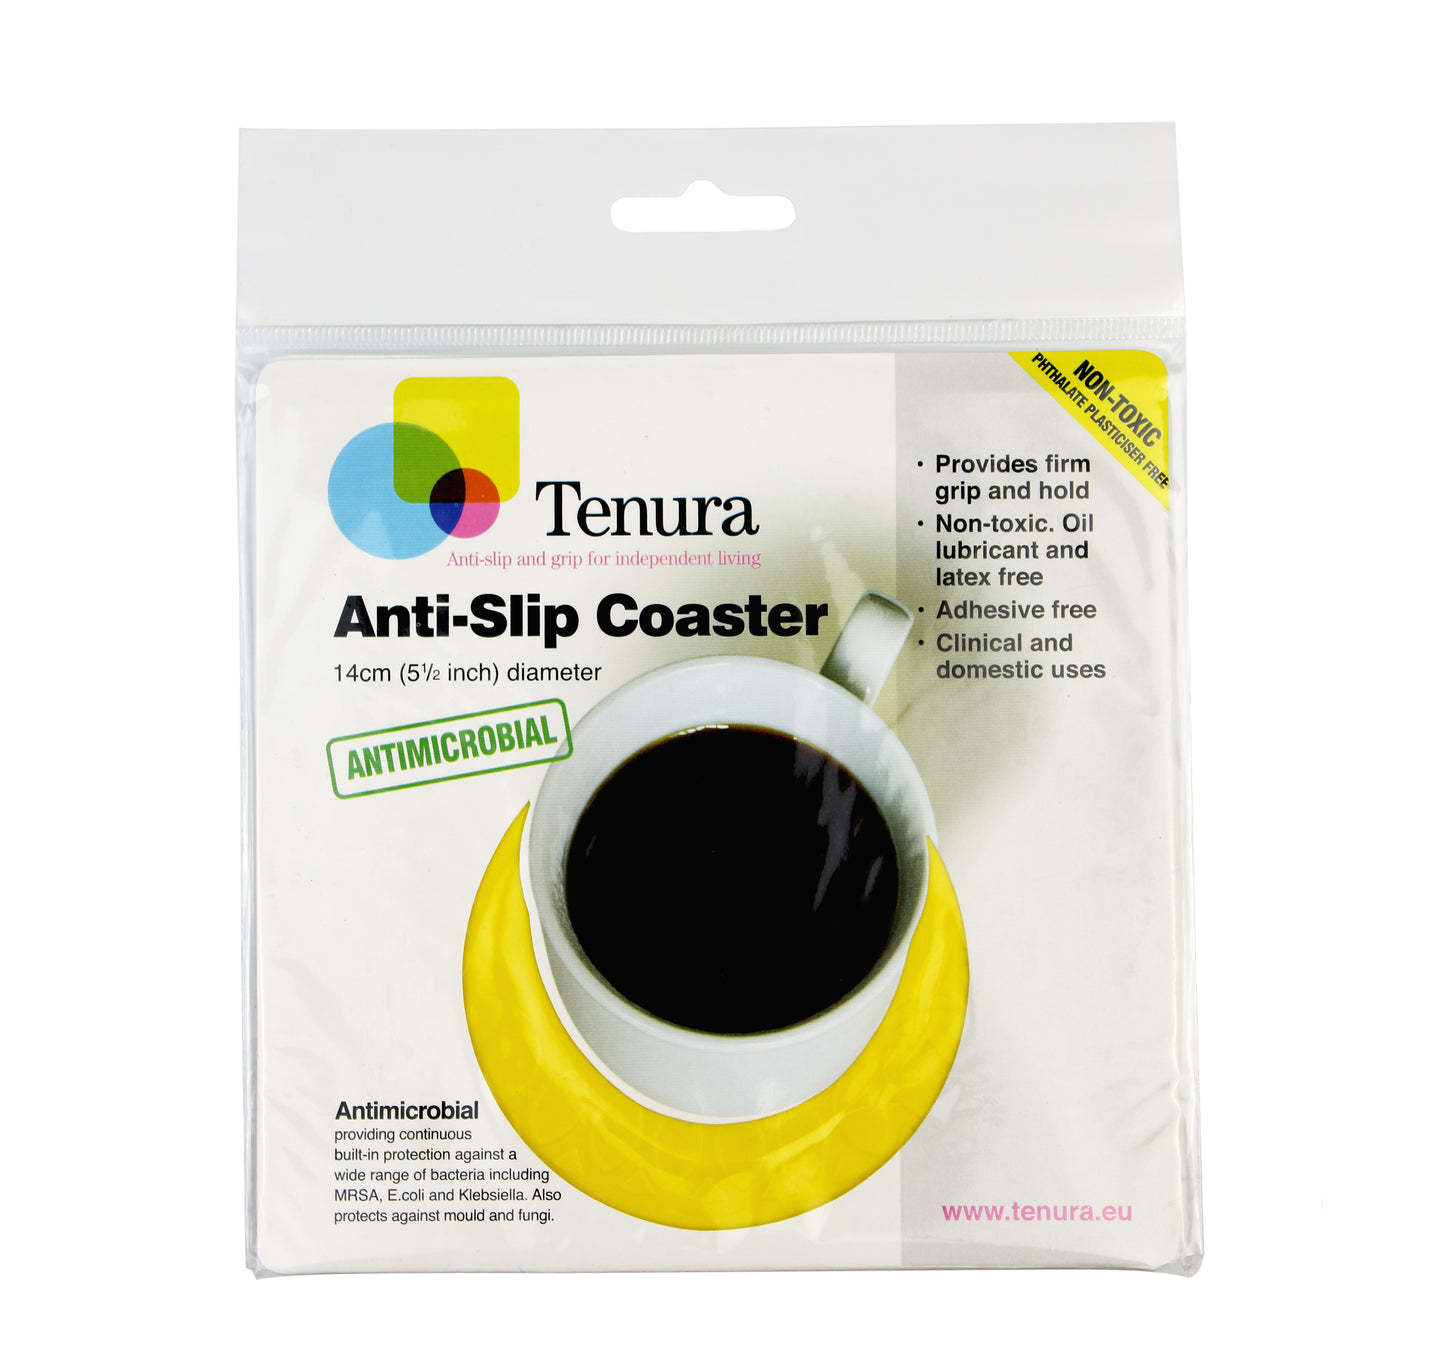 yellow anti-slip coaster in packaging